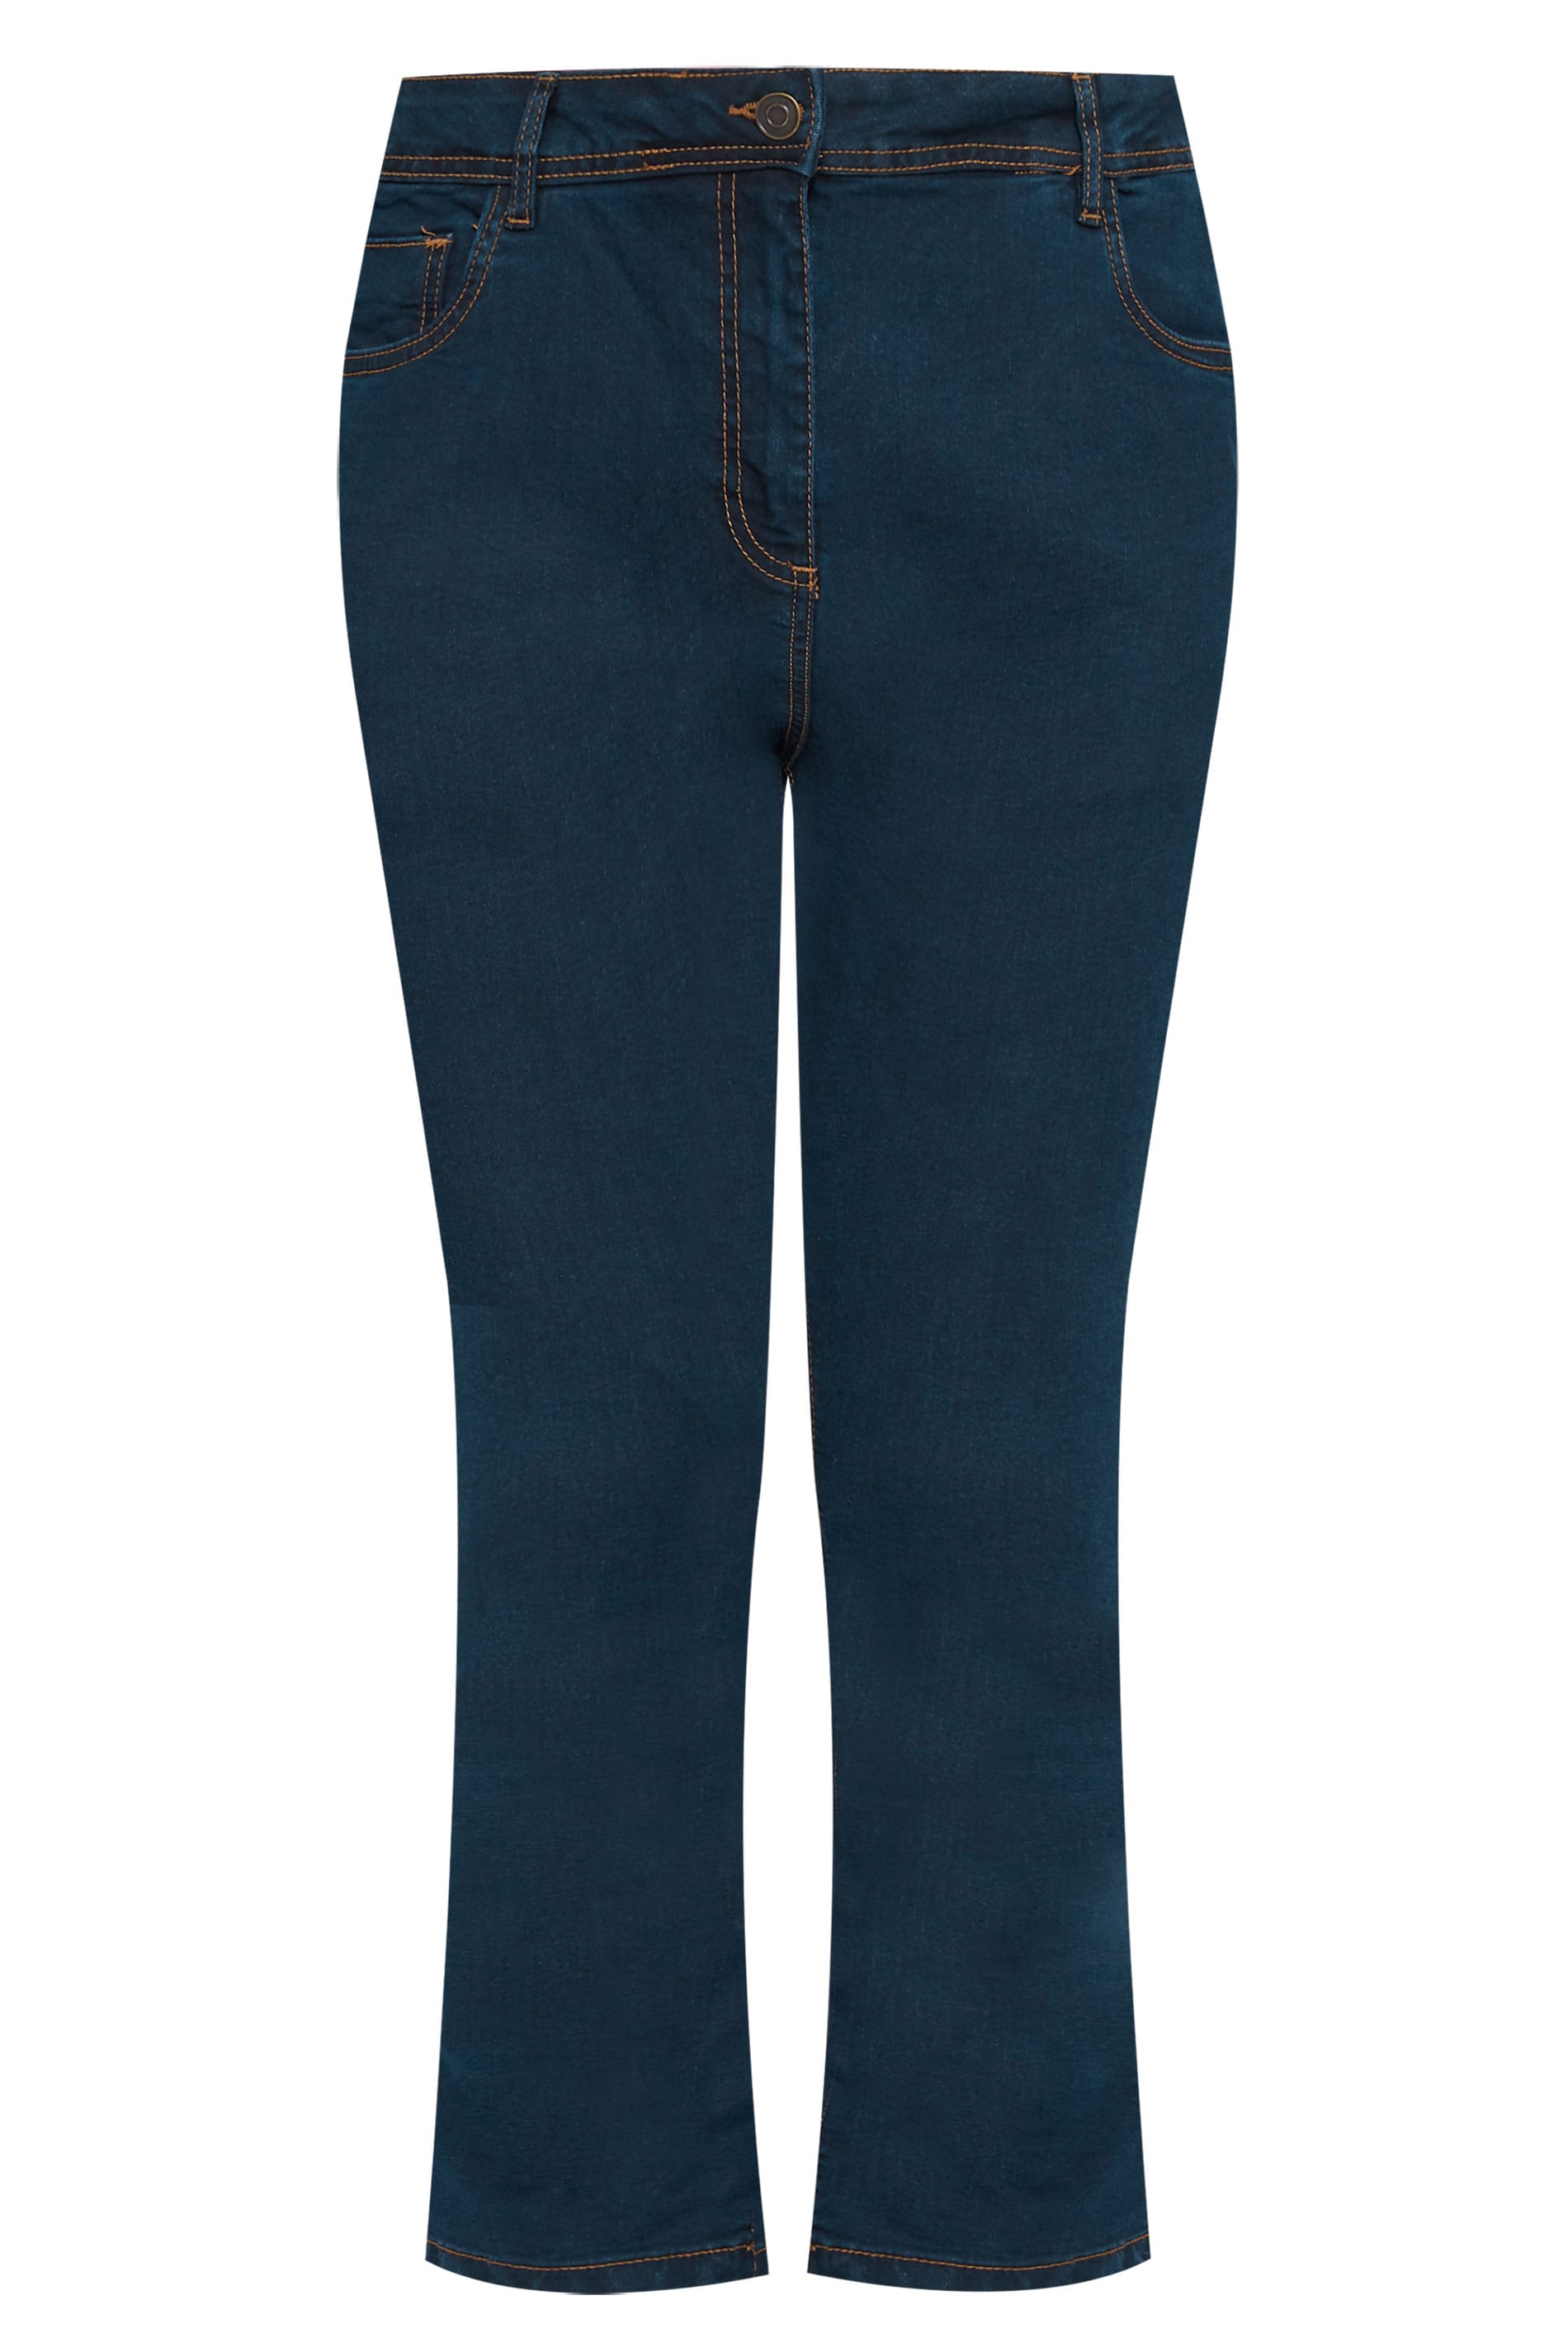 Indigo Bootcut 5 Pocket Denim Jeans Plus size 14,16,18,20 